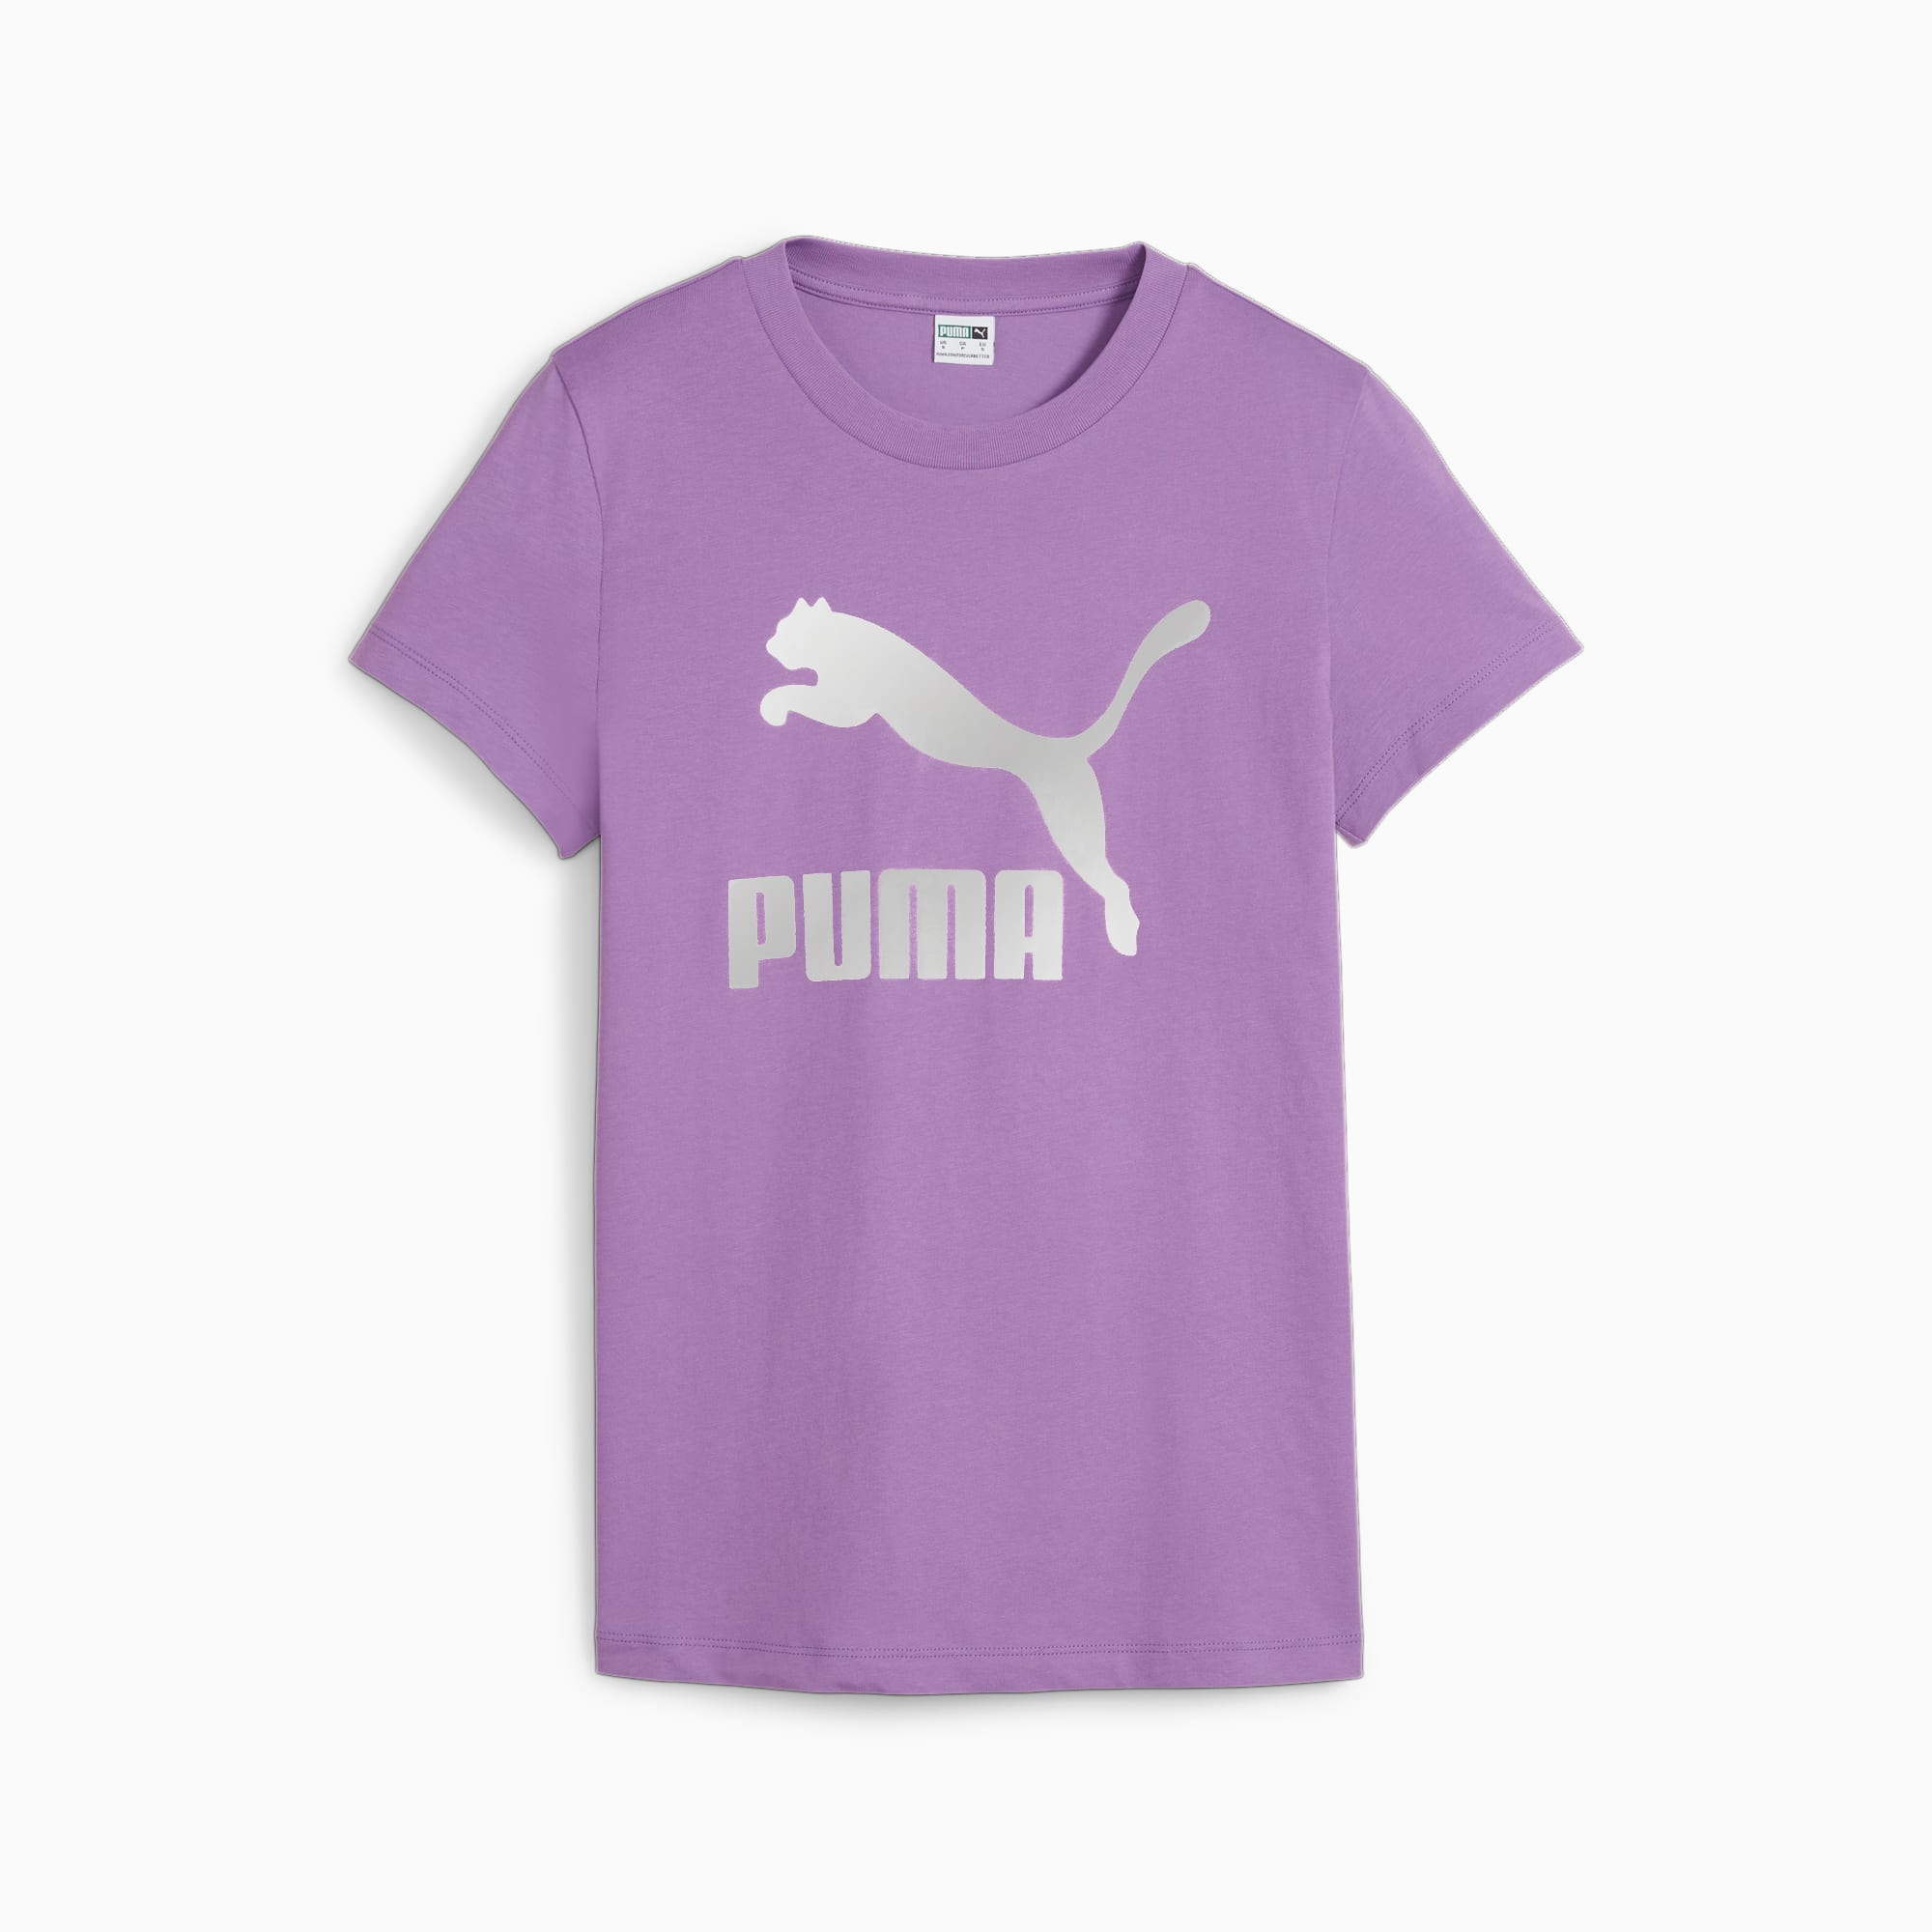 PUMA Classics Shiny Logo Women's T-Shirt, Ultraviolet, Size L, Clothing